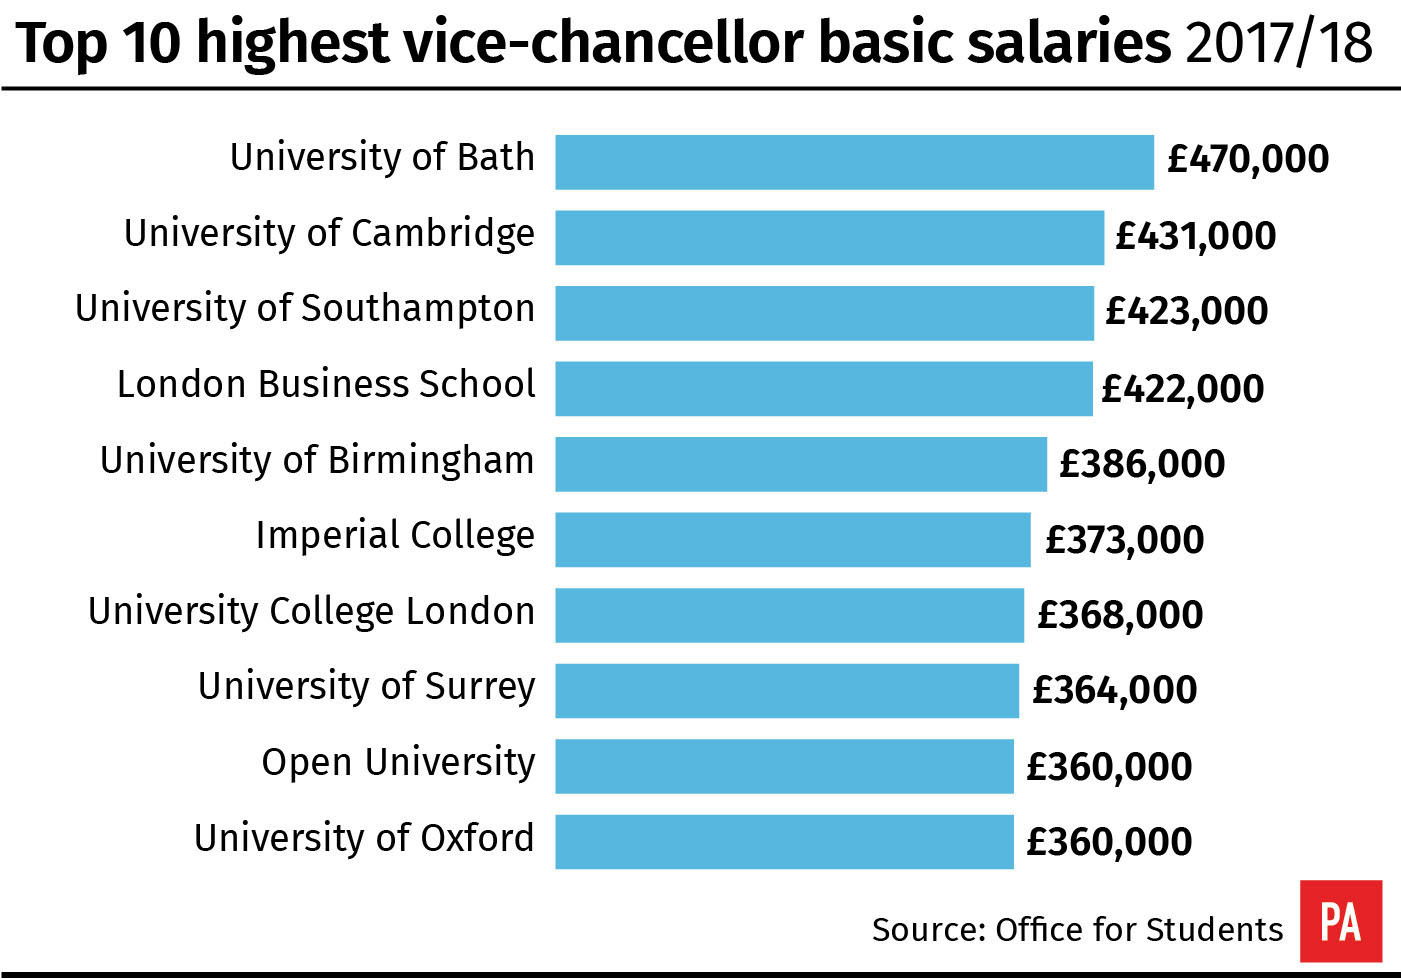 Top 10 highest vice-chancellor basic salaries 2017/18